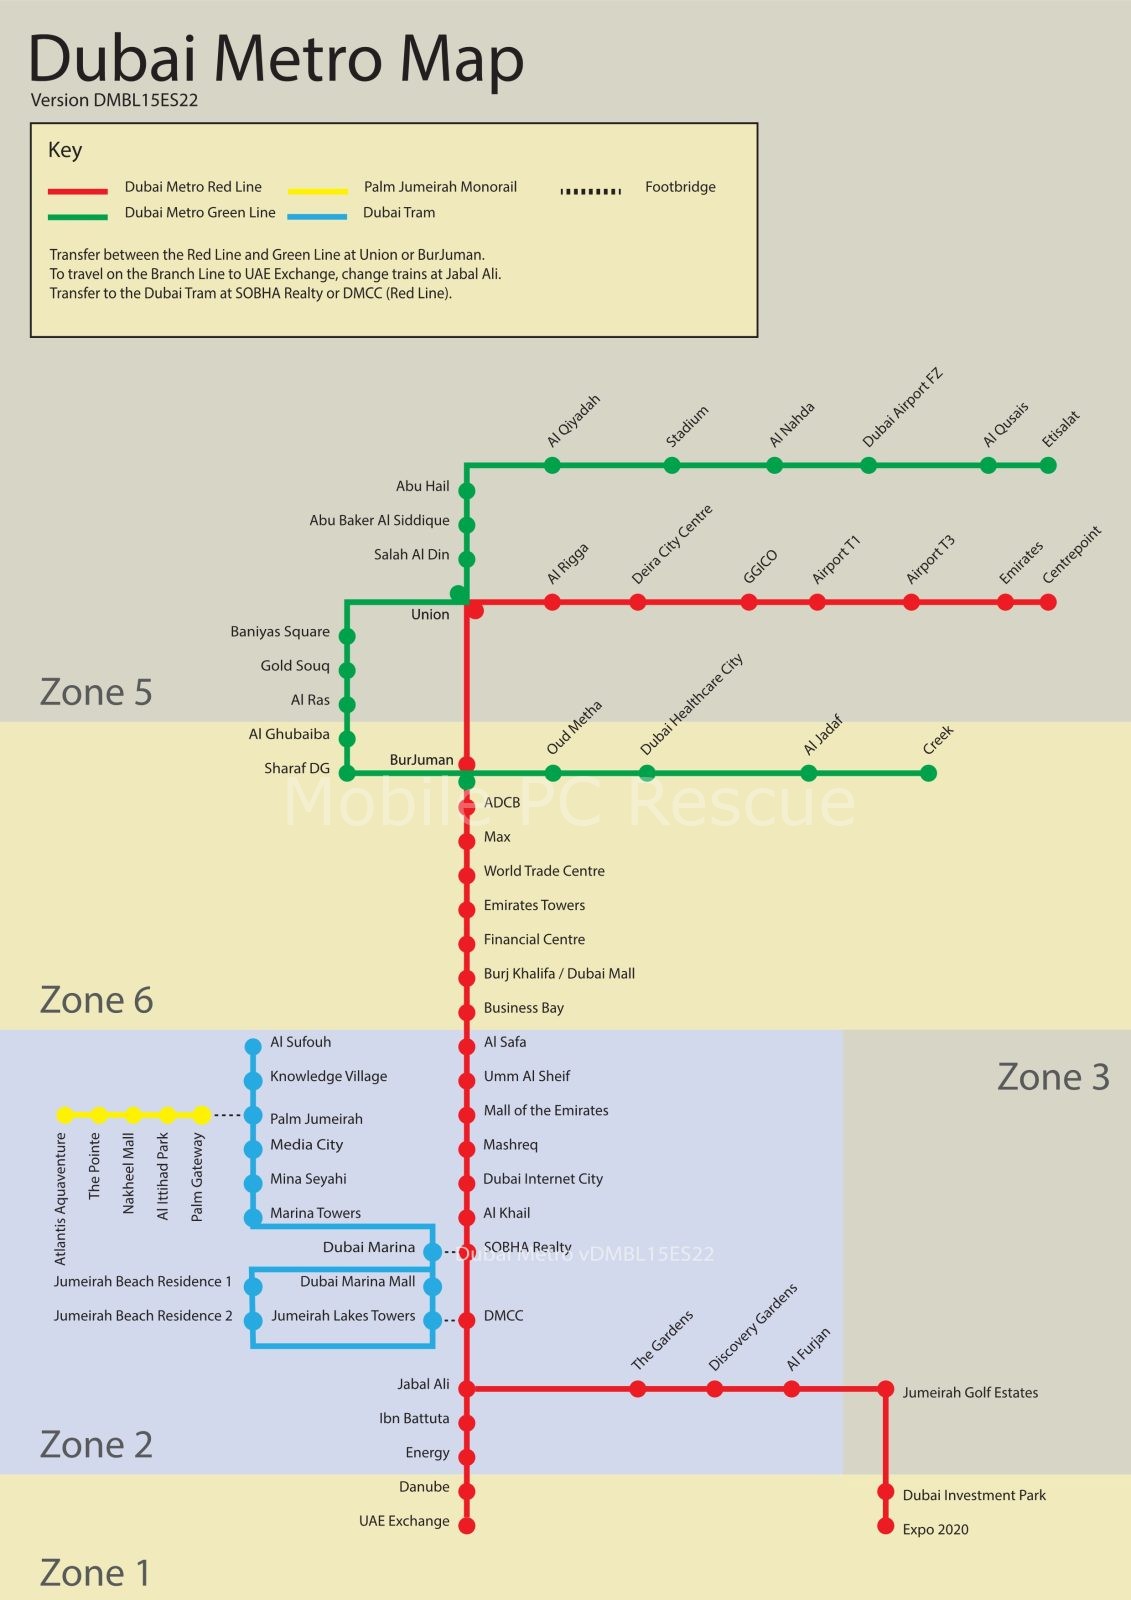 Dubai Metro Map 2022 by Steve Procter